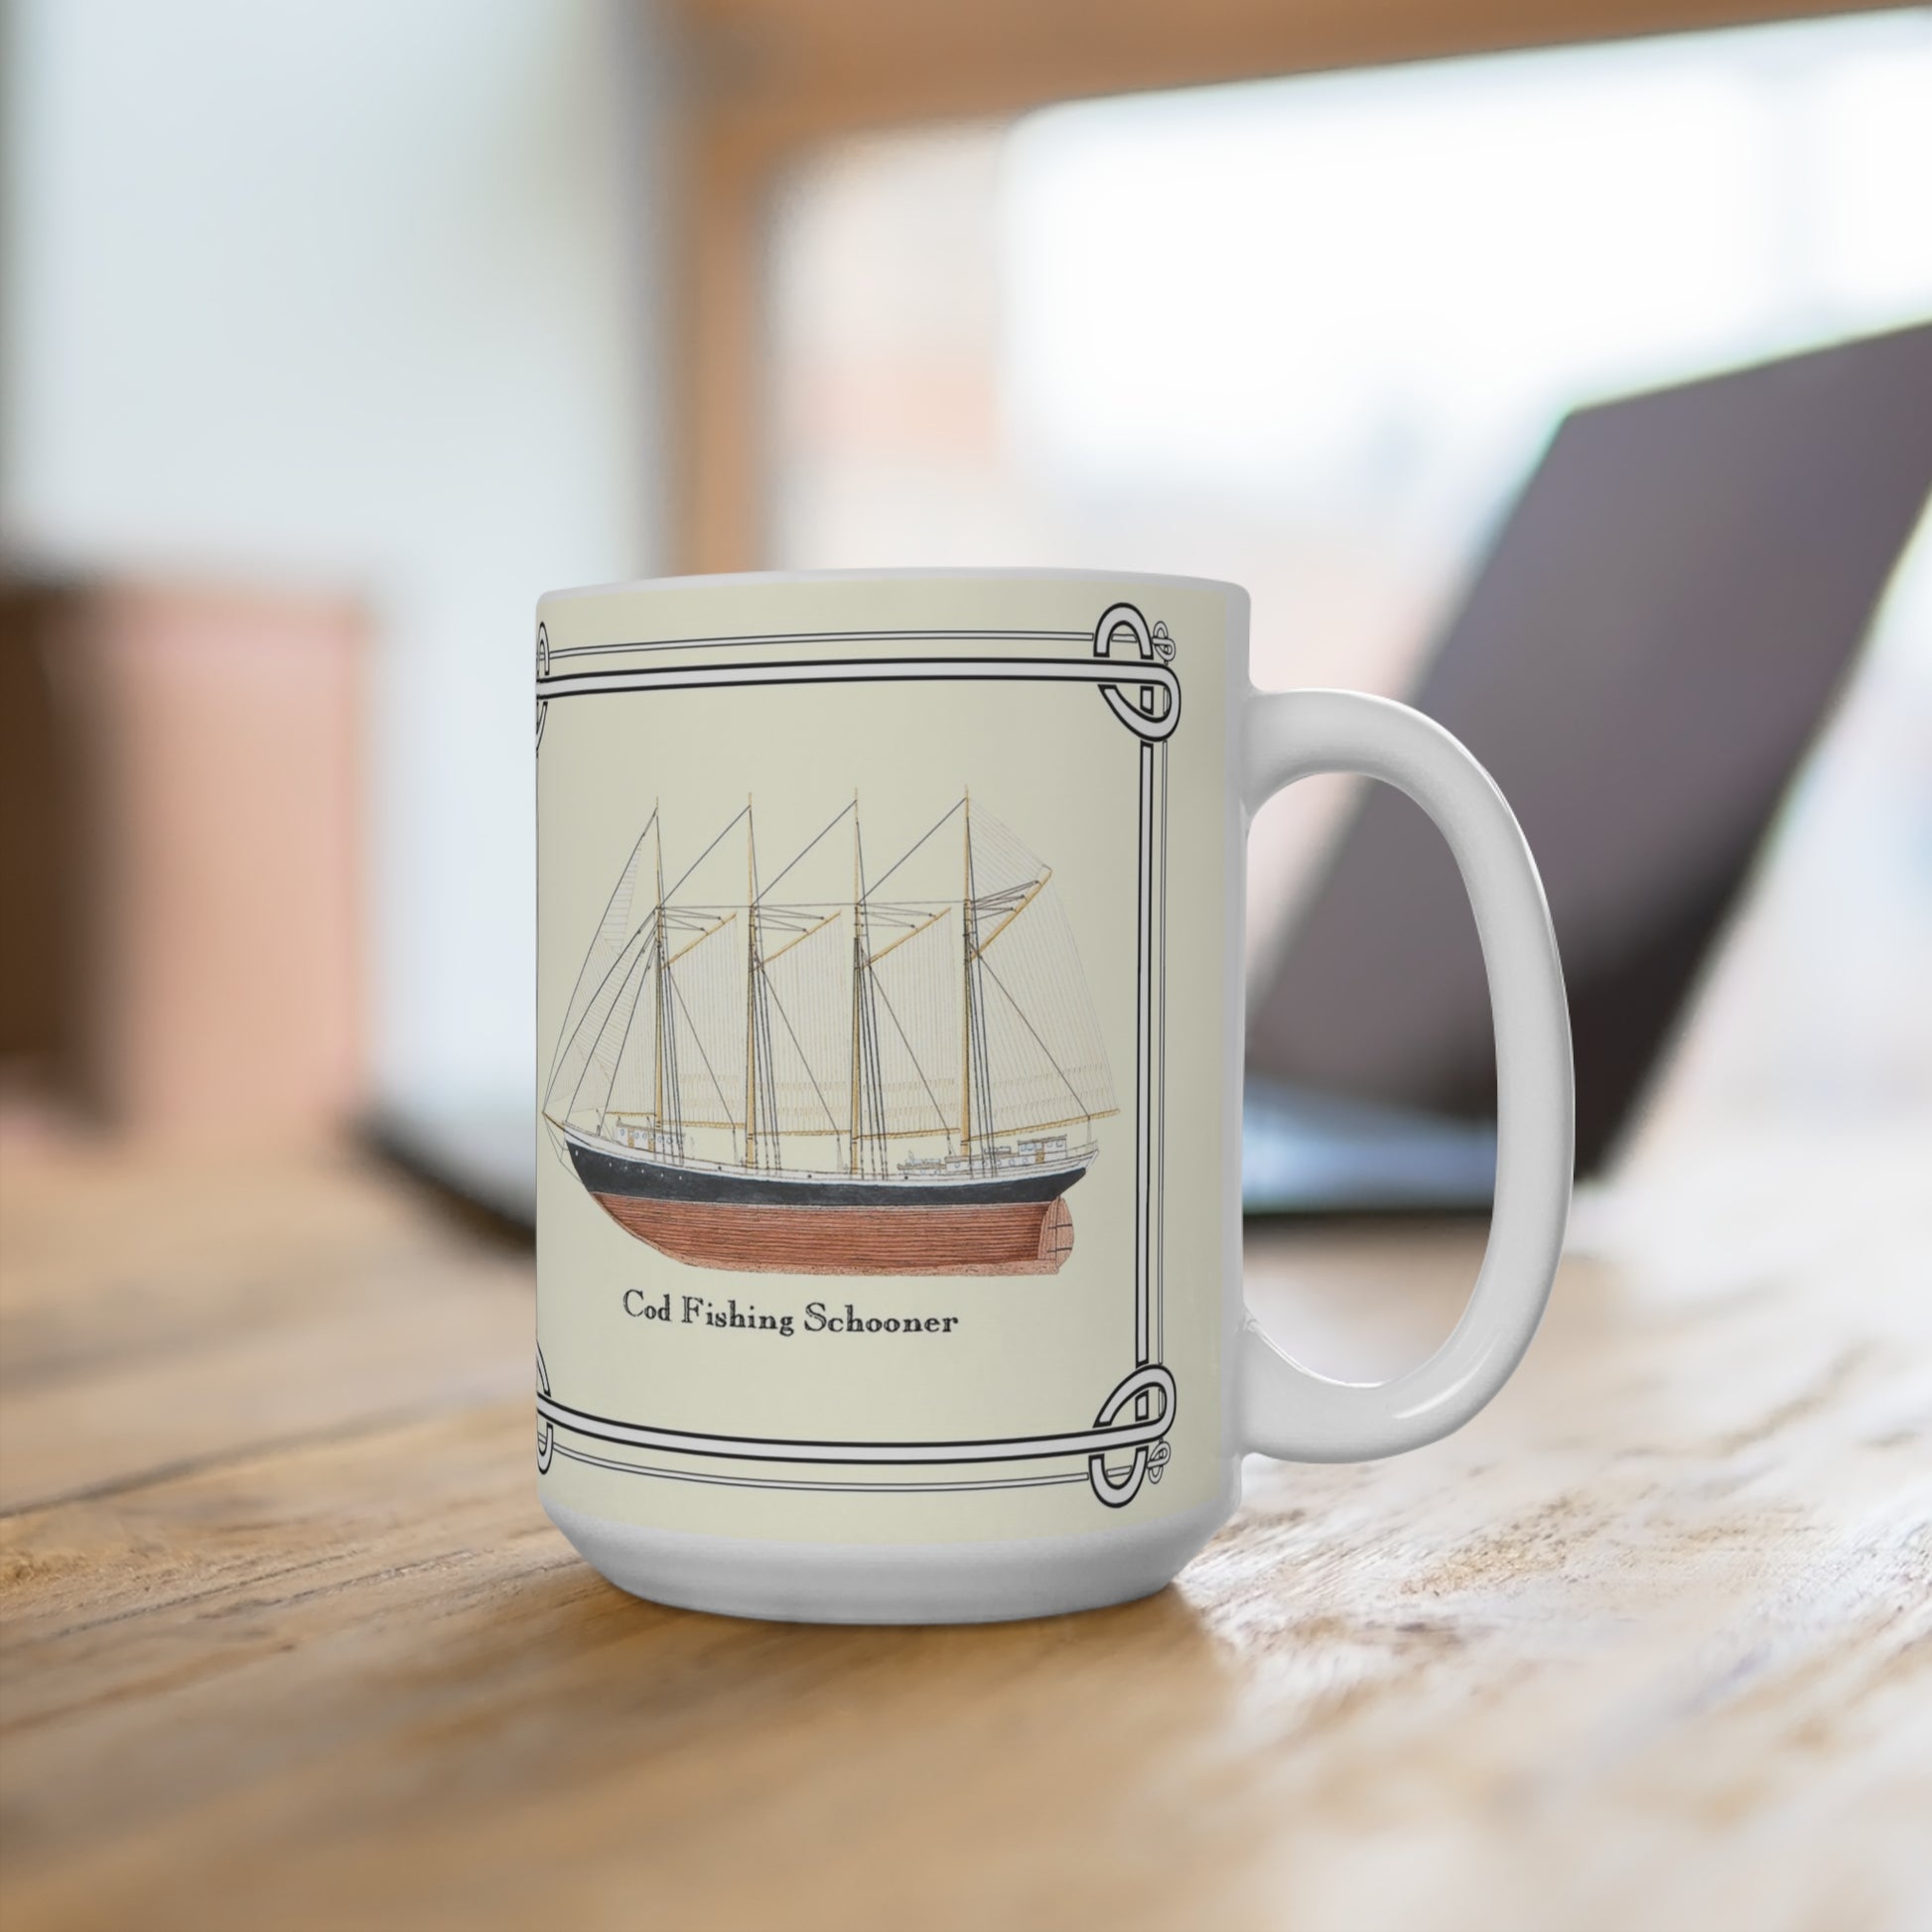 This 15 oz. Mug features the Atlantic Pearl, a classic Cod Fishing Schooner.